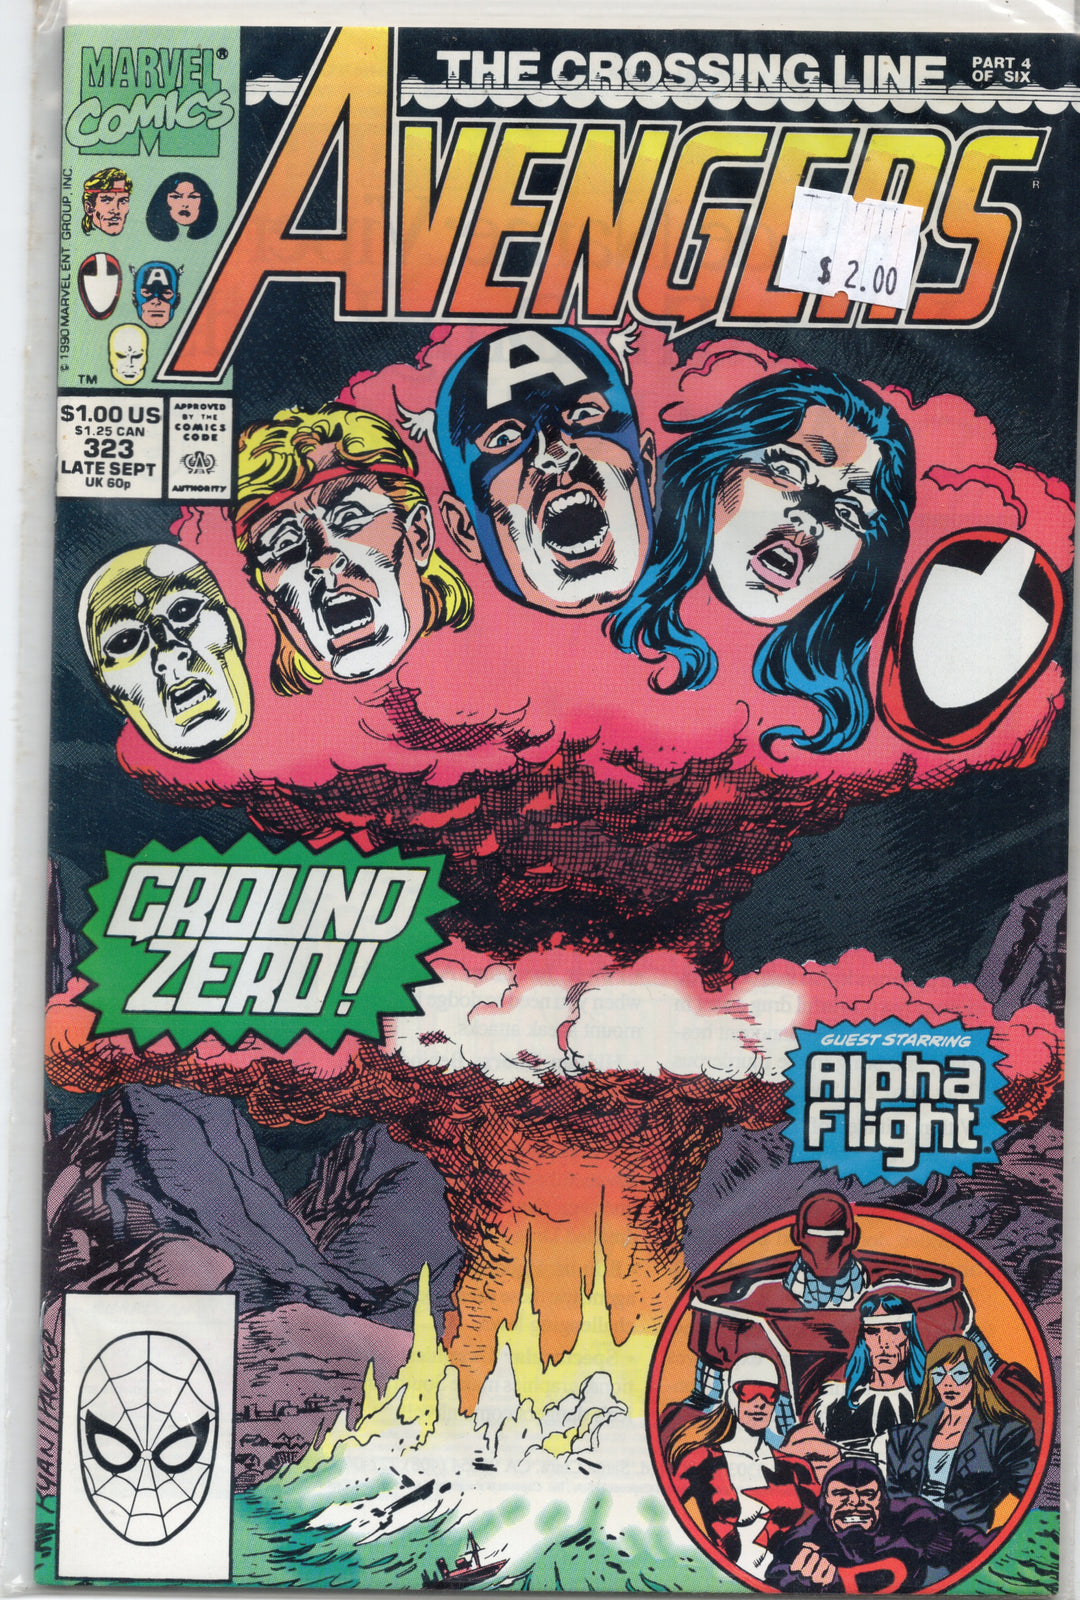 The Avengers #323